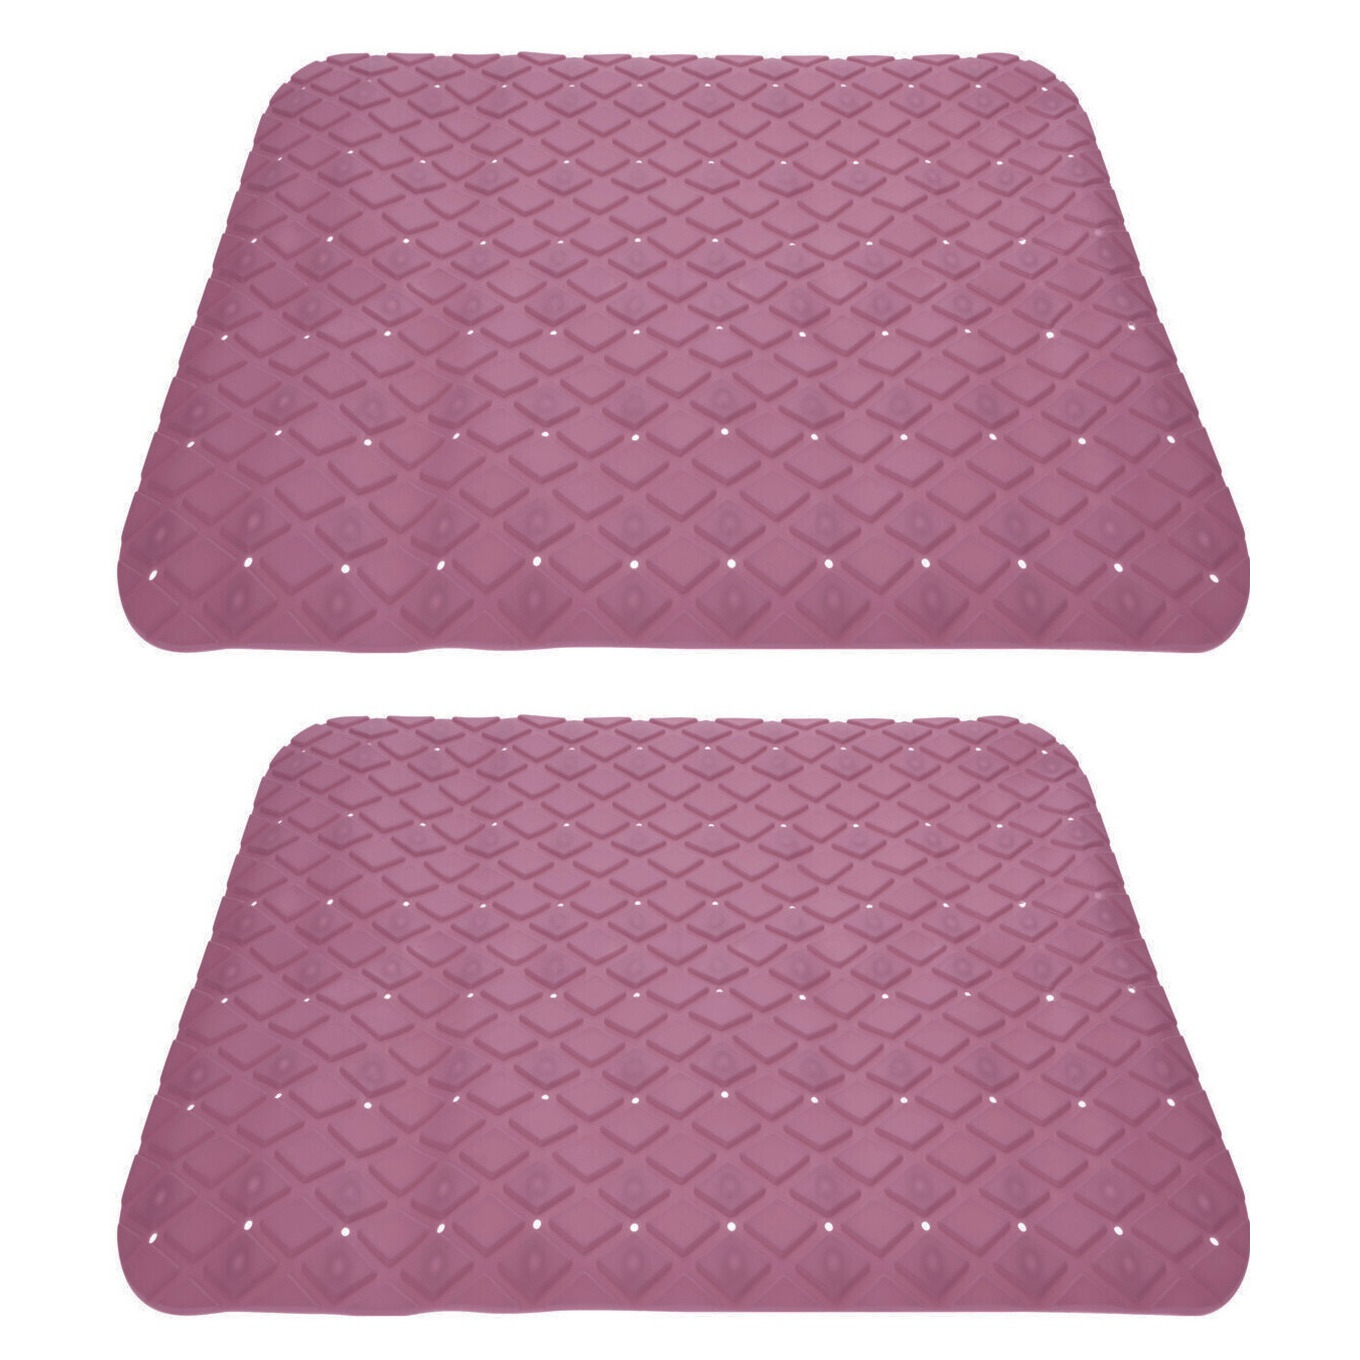 2x stuks anti-slip badmatten oud roze 55 x 55 cm vierkant